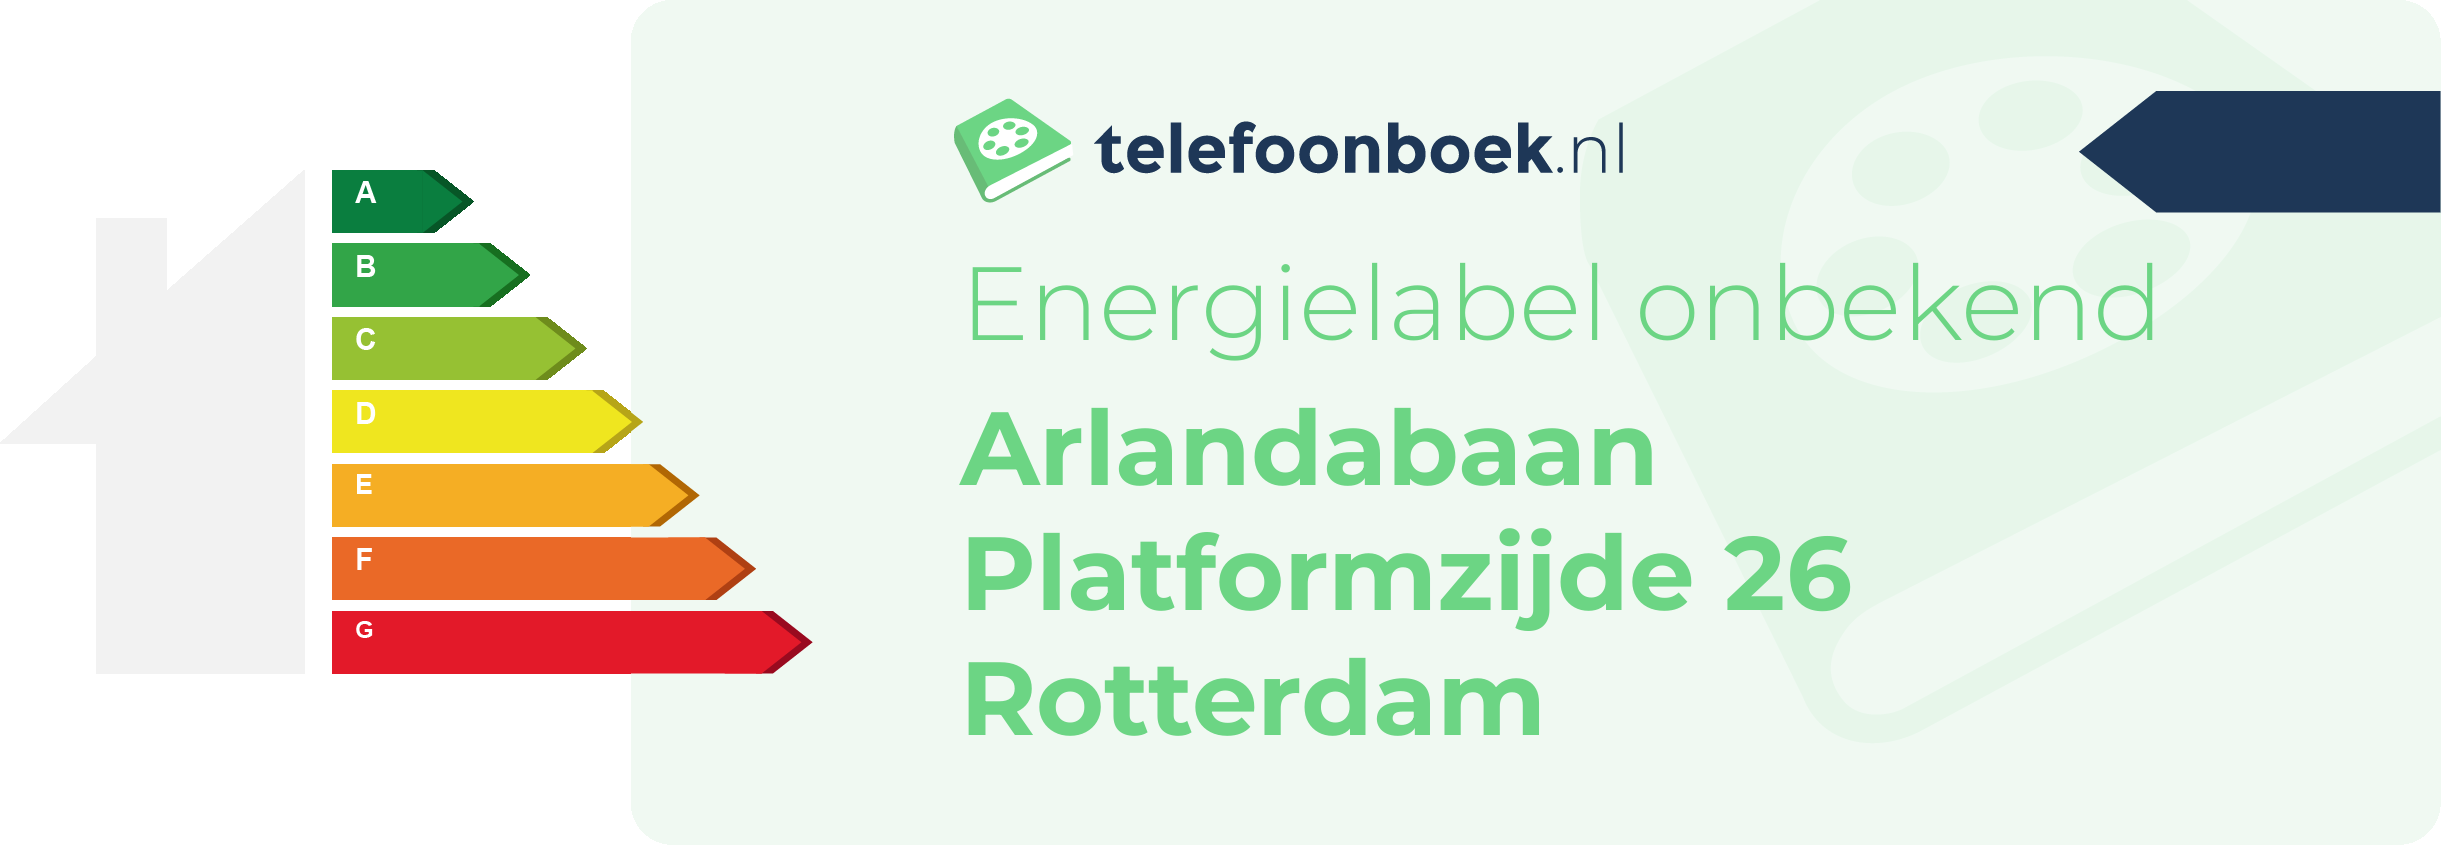 Energielabel Arlandabaan Platformzijde 26 Rotterdam